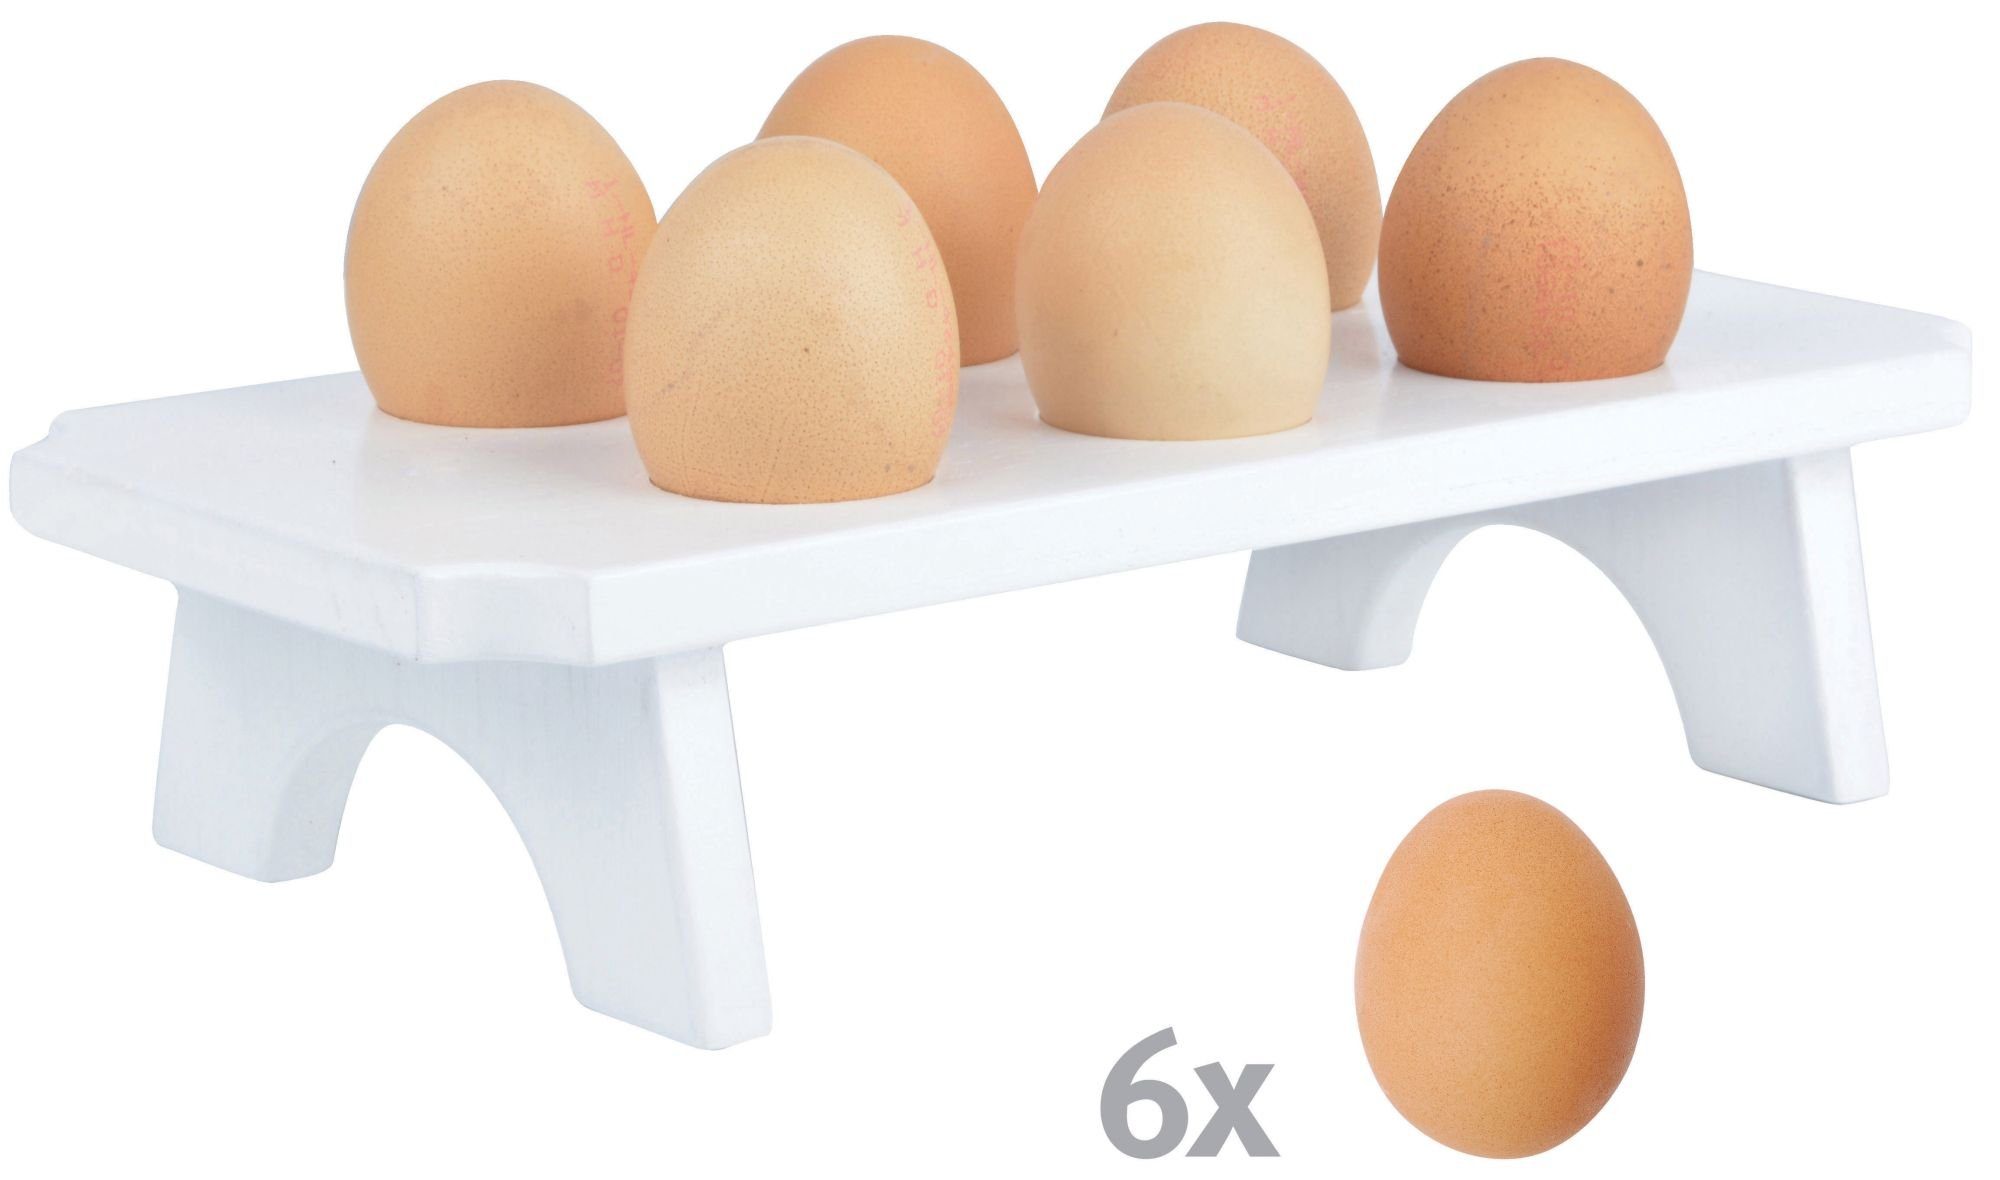 esschert design Eierbecher, Eierträger für bis zu 6 Eier, Maße 26.6 x 13 x 6.4 cm